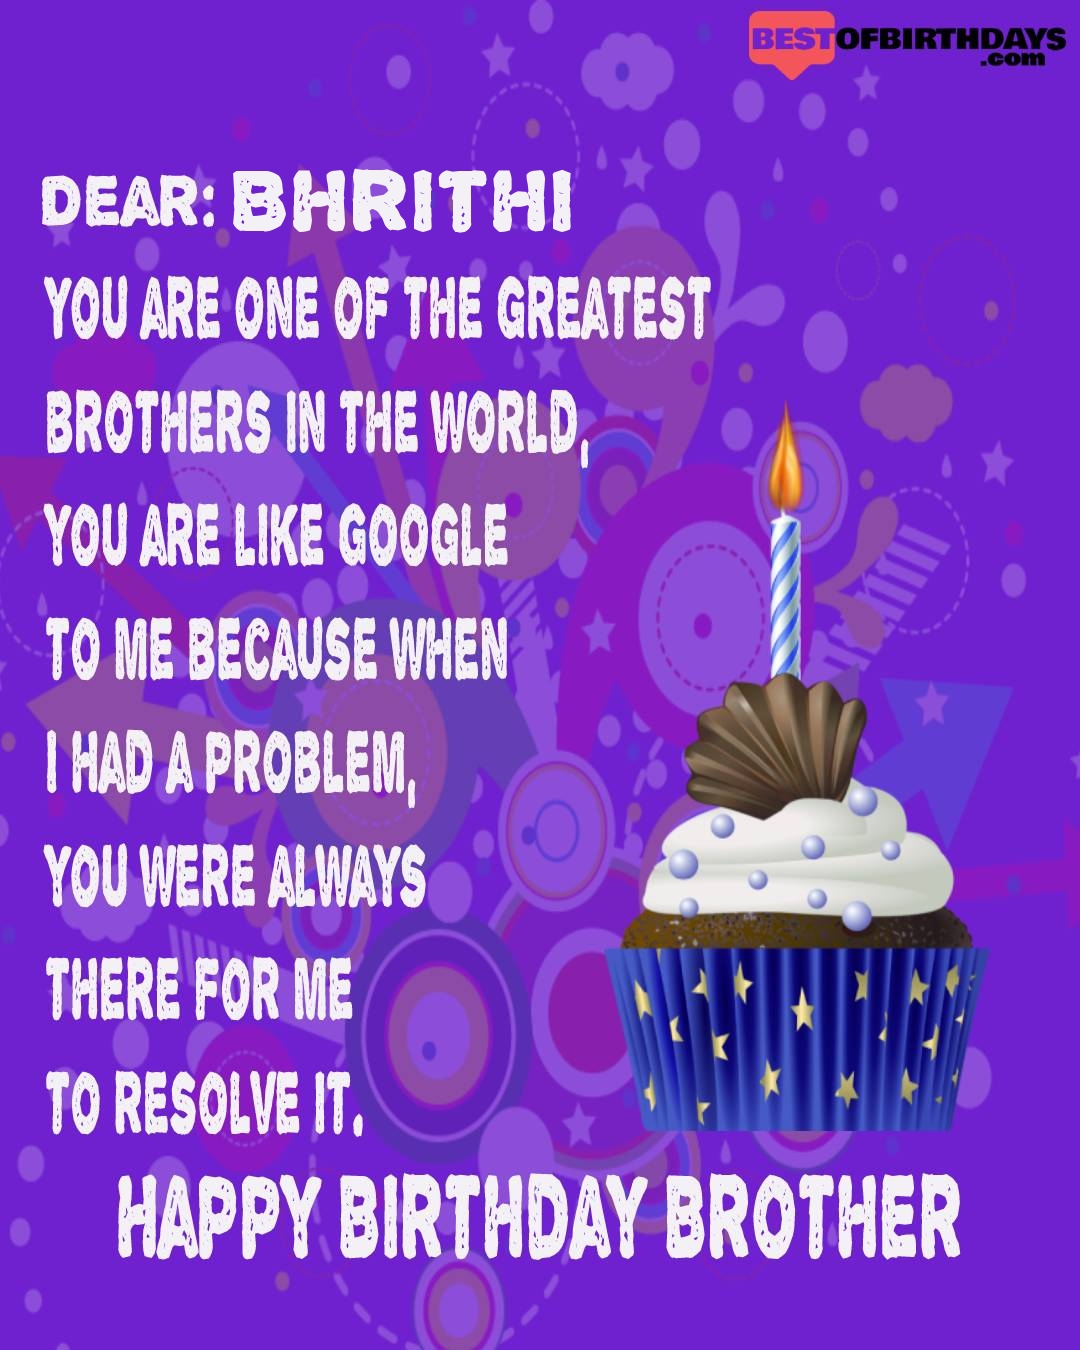 Happy birthday bhrithi bhai brother bro